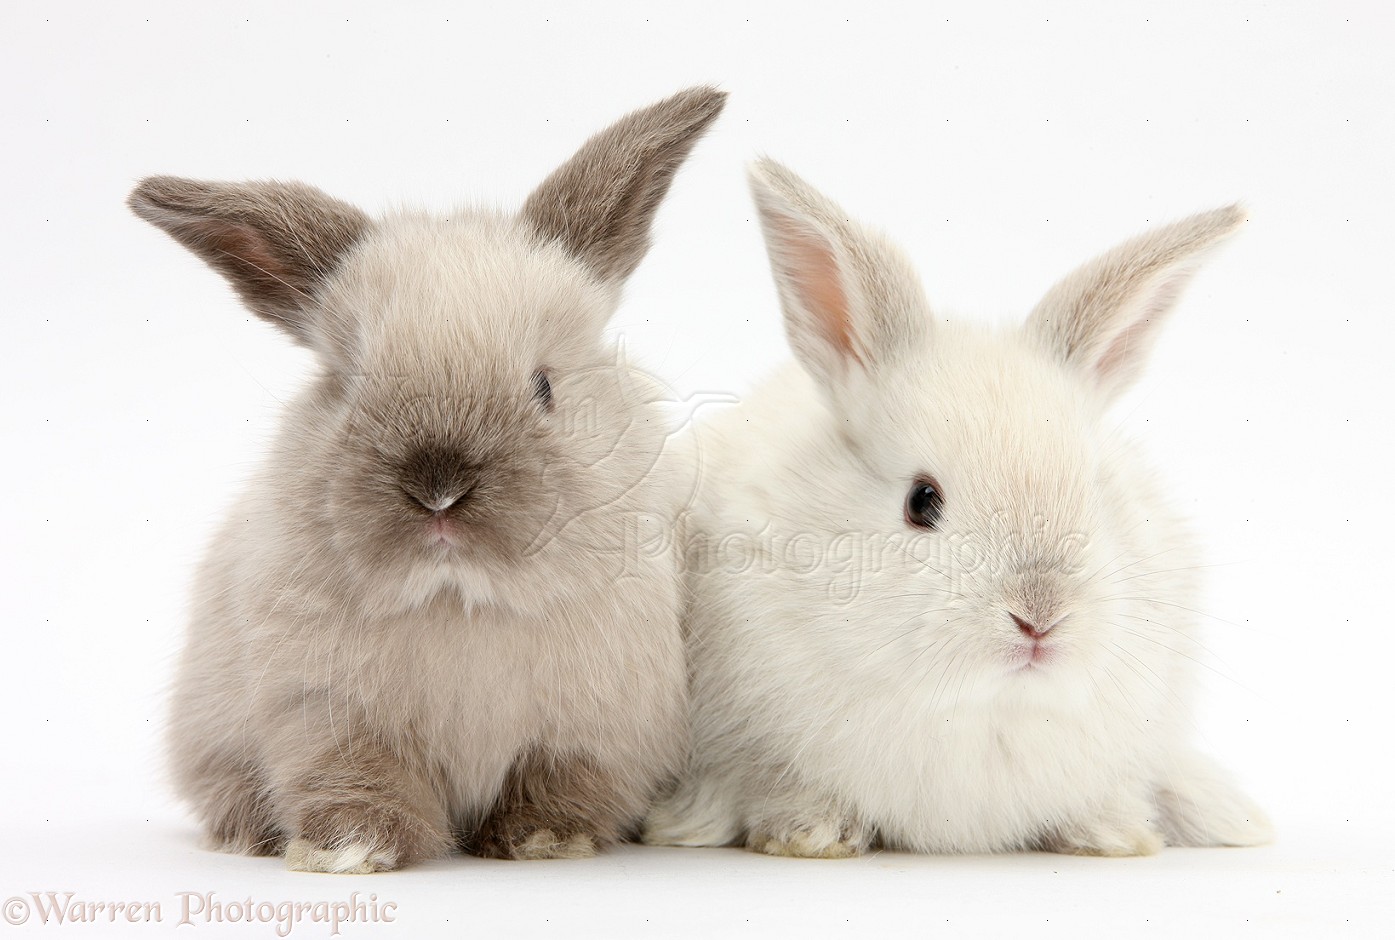 cute white baby rabbits